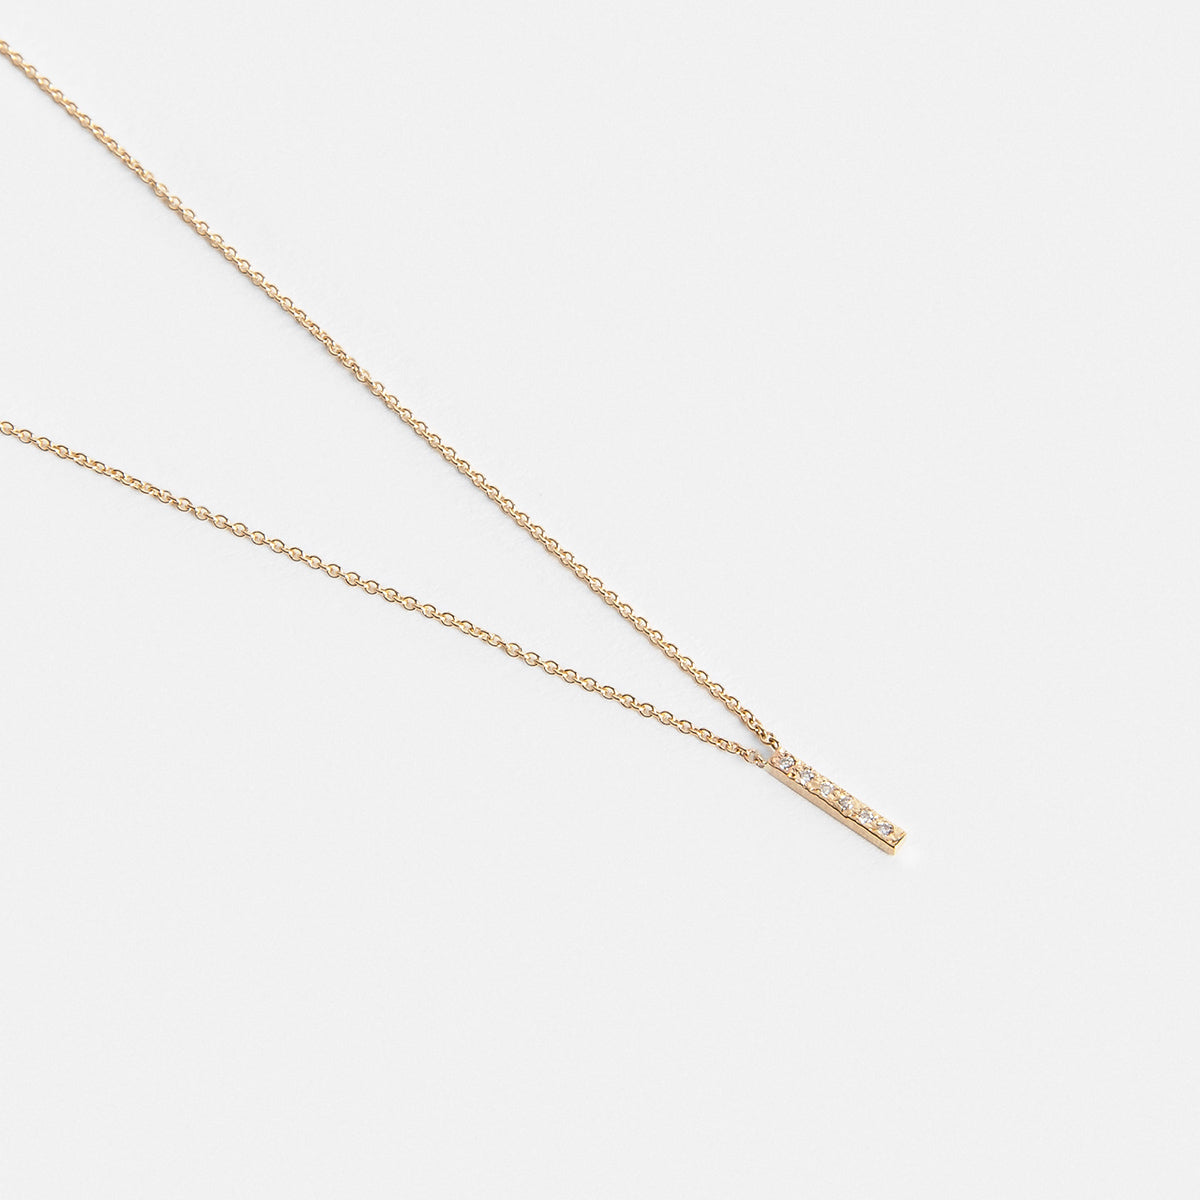 Mini Tiru Delicate Necklace in 14k Gold set with White Diamonds By SHW Fine Jewelry NYC